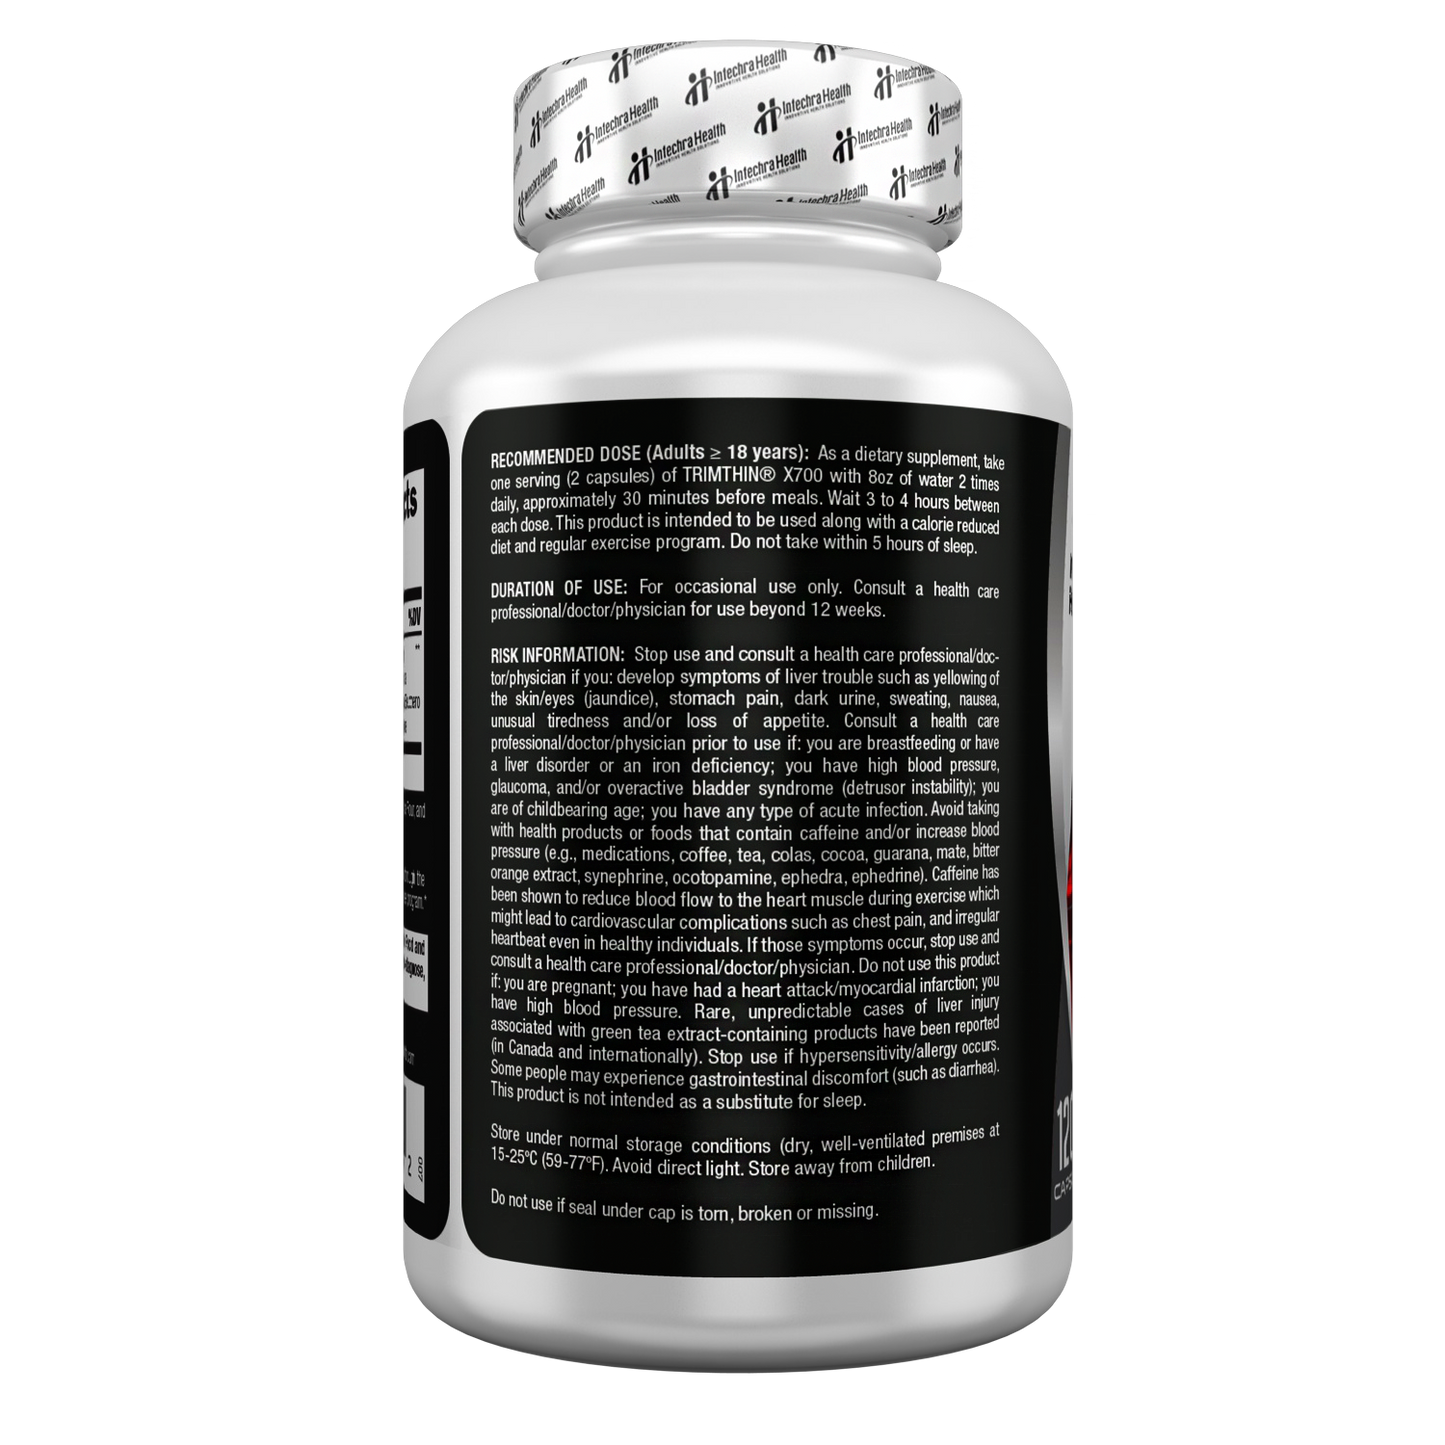 TRIMTHIN X700 Diet Pills - Pre-Workout Formula - 120 Tablets